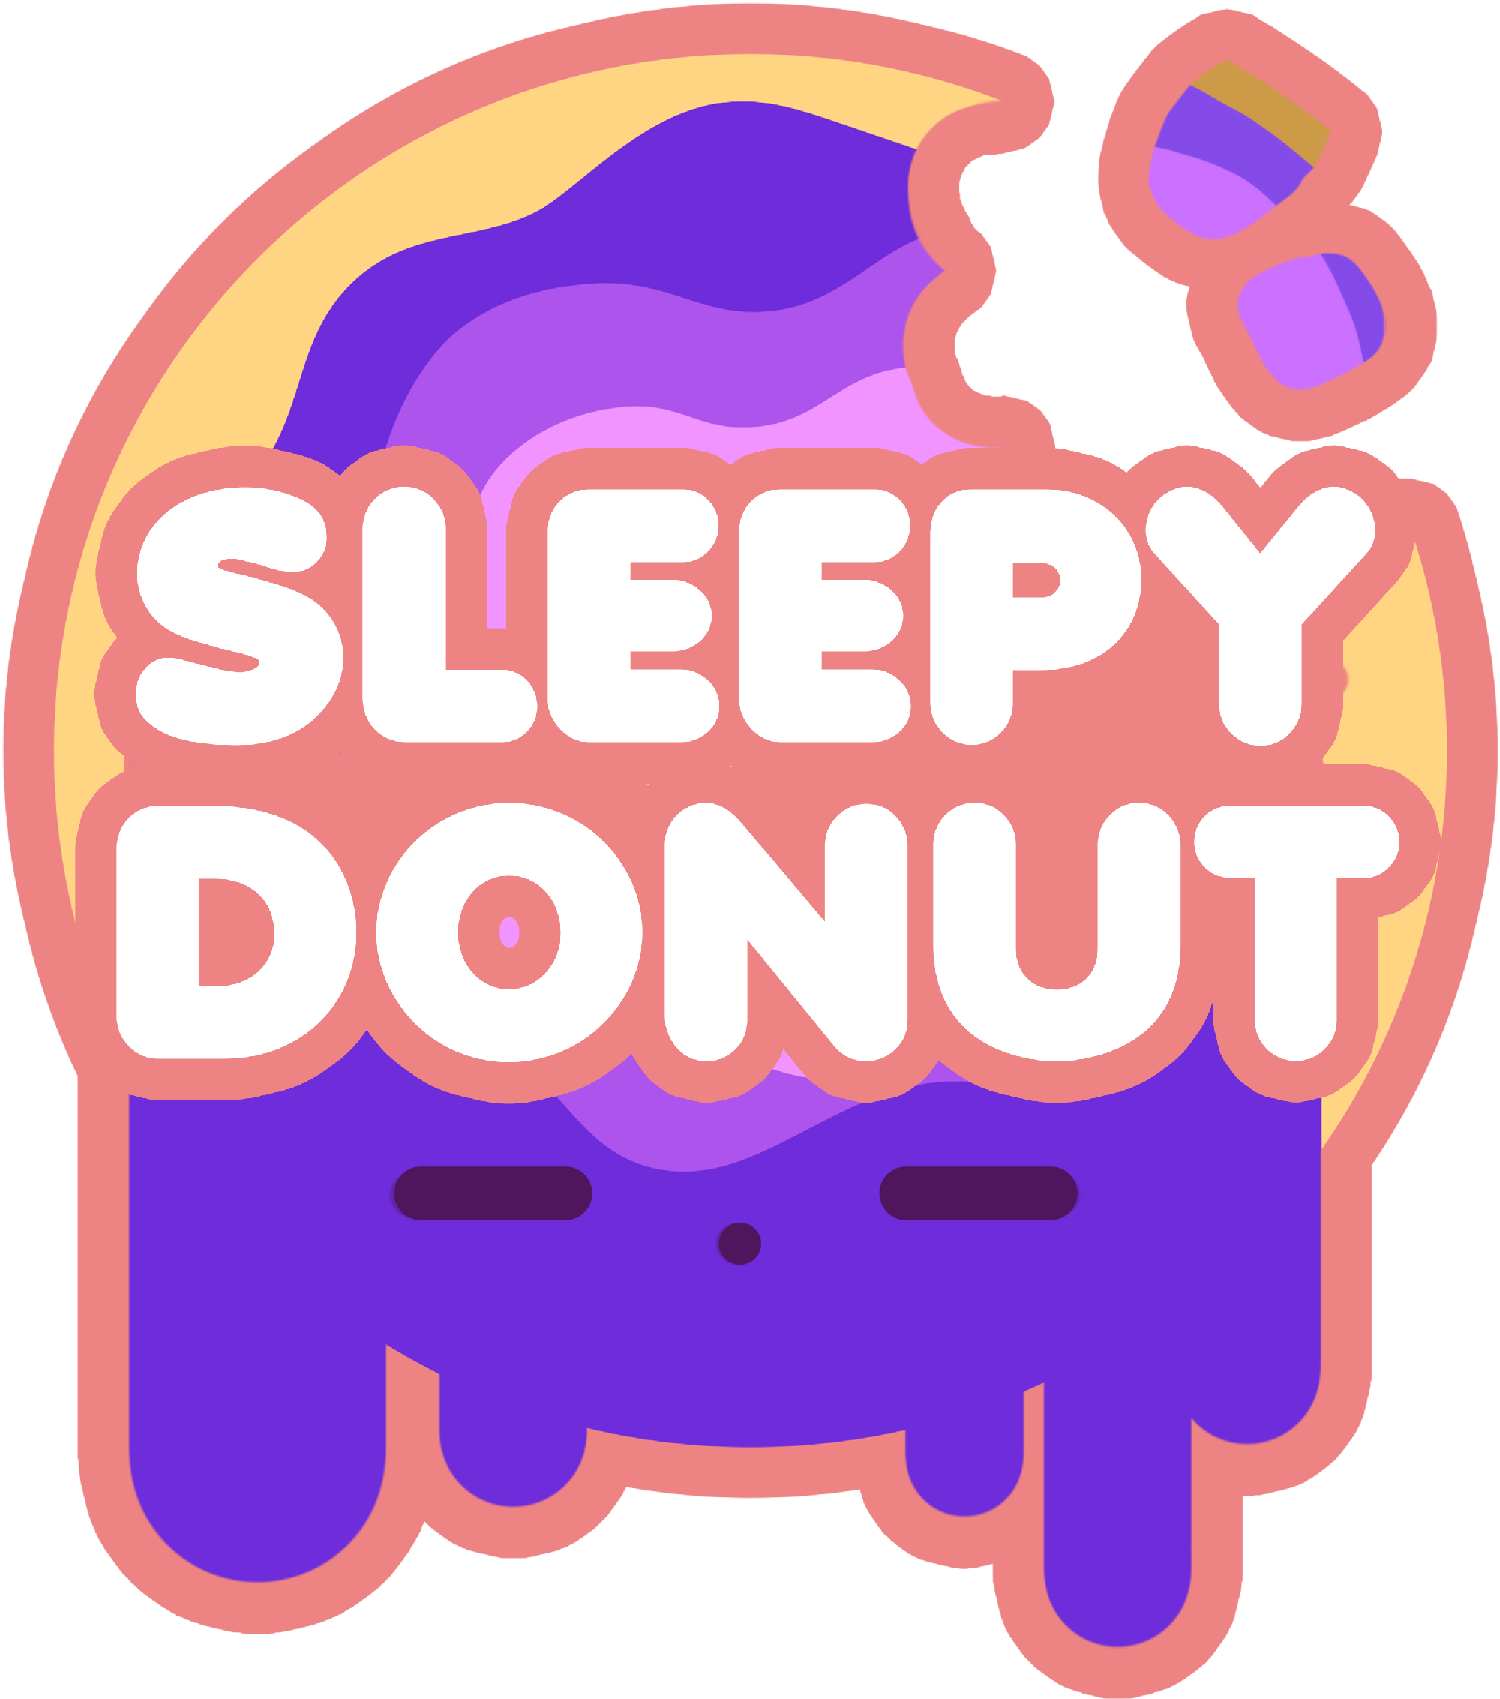 SleepyDonut Logo